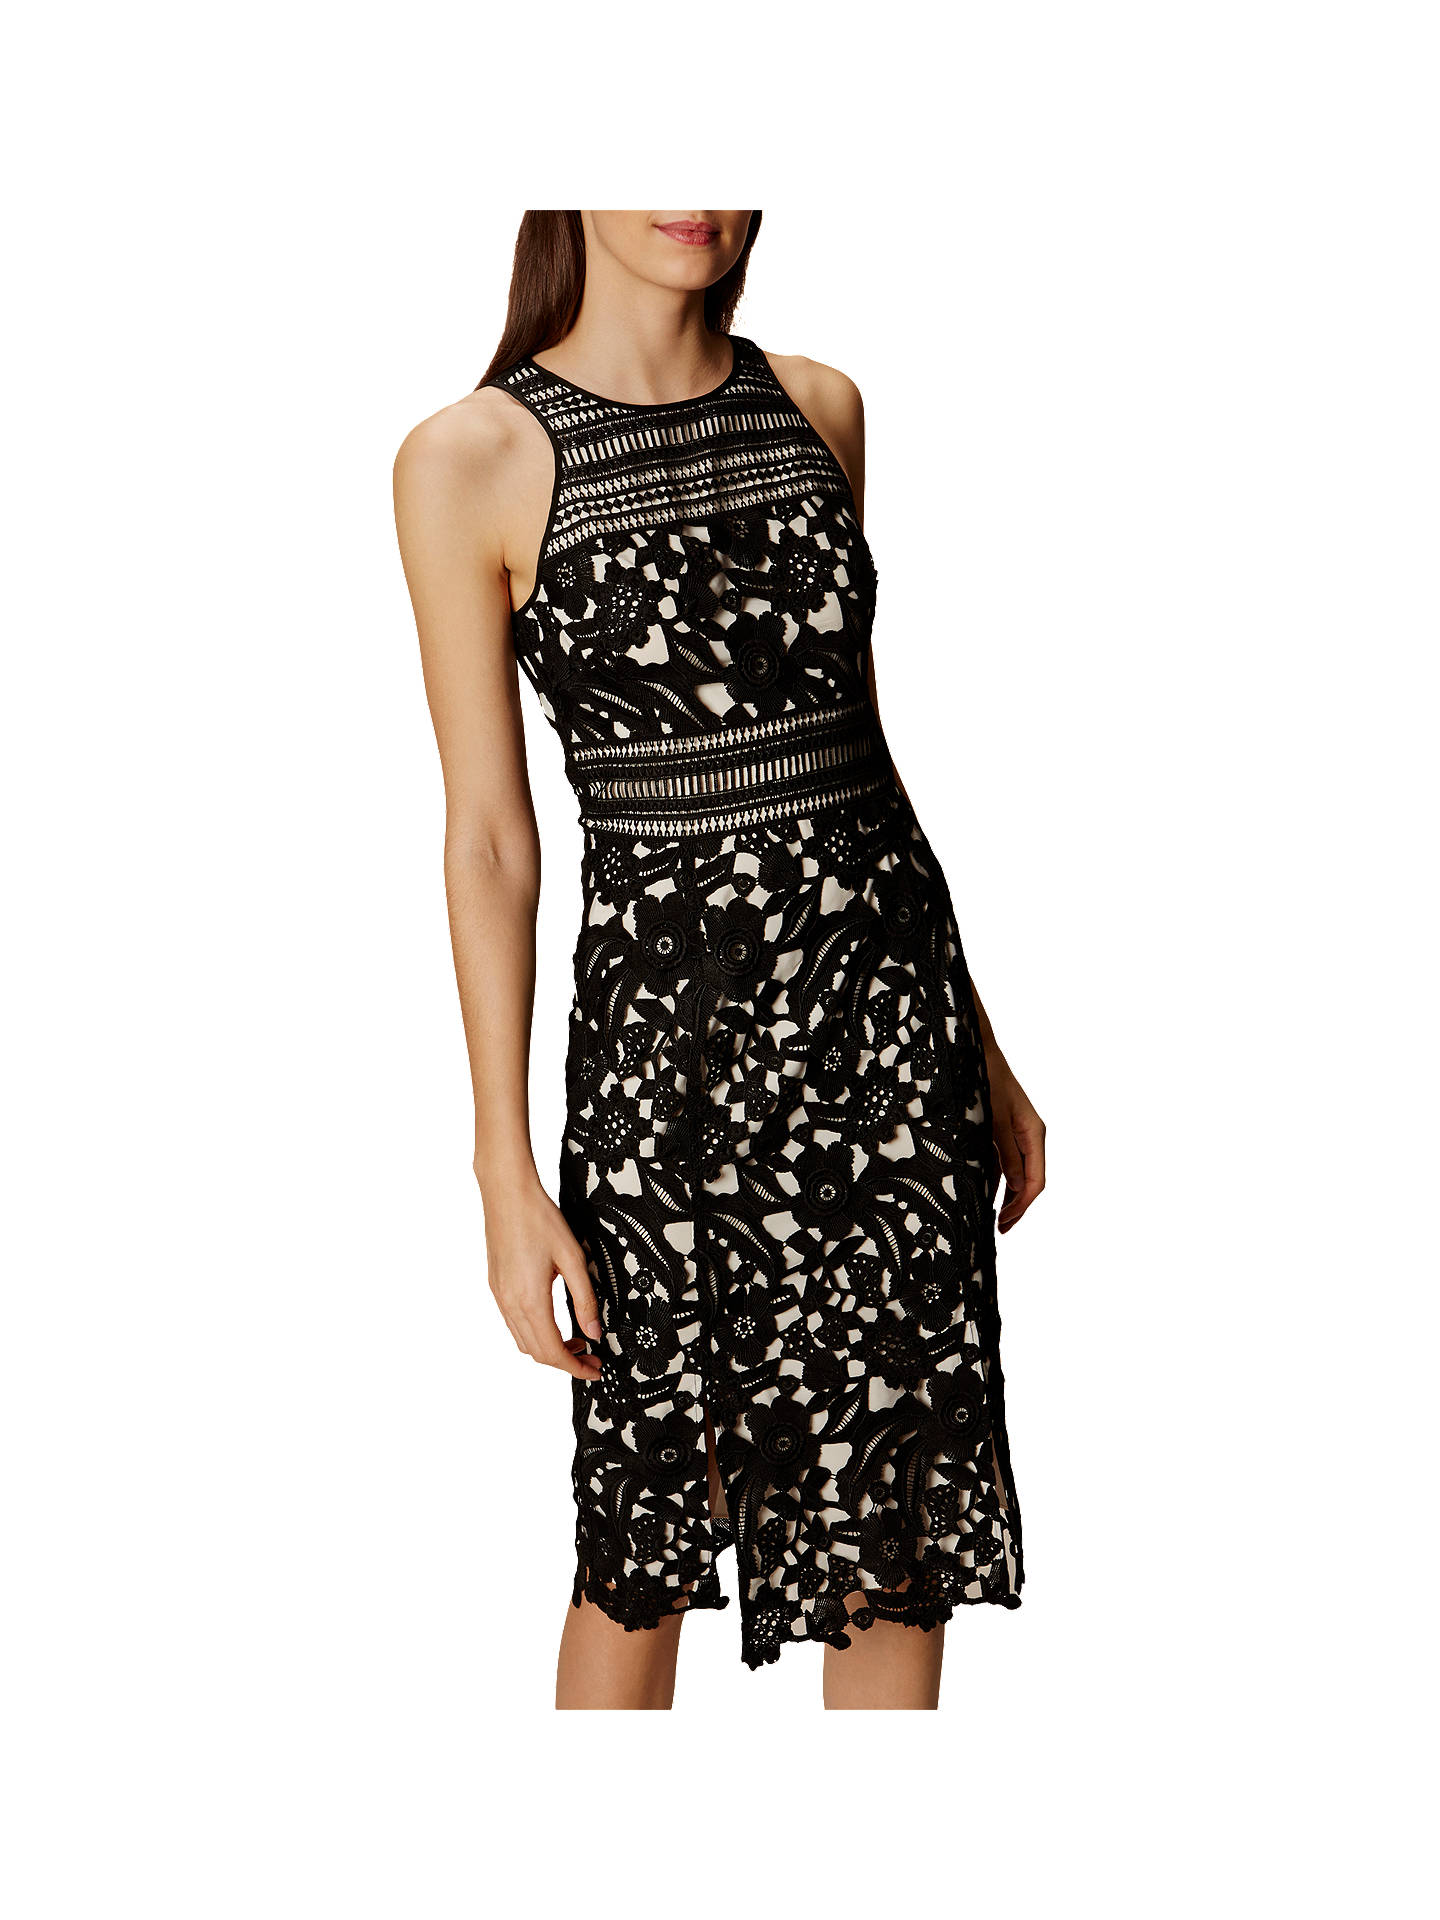 Karen Millen Lace Pencil Dress, Black/Multi at John Lewis & Partners